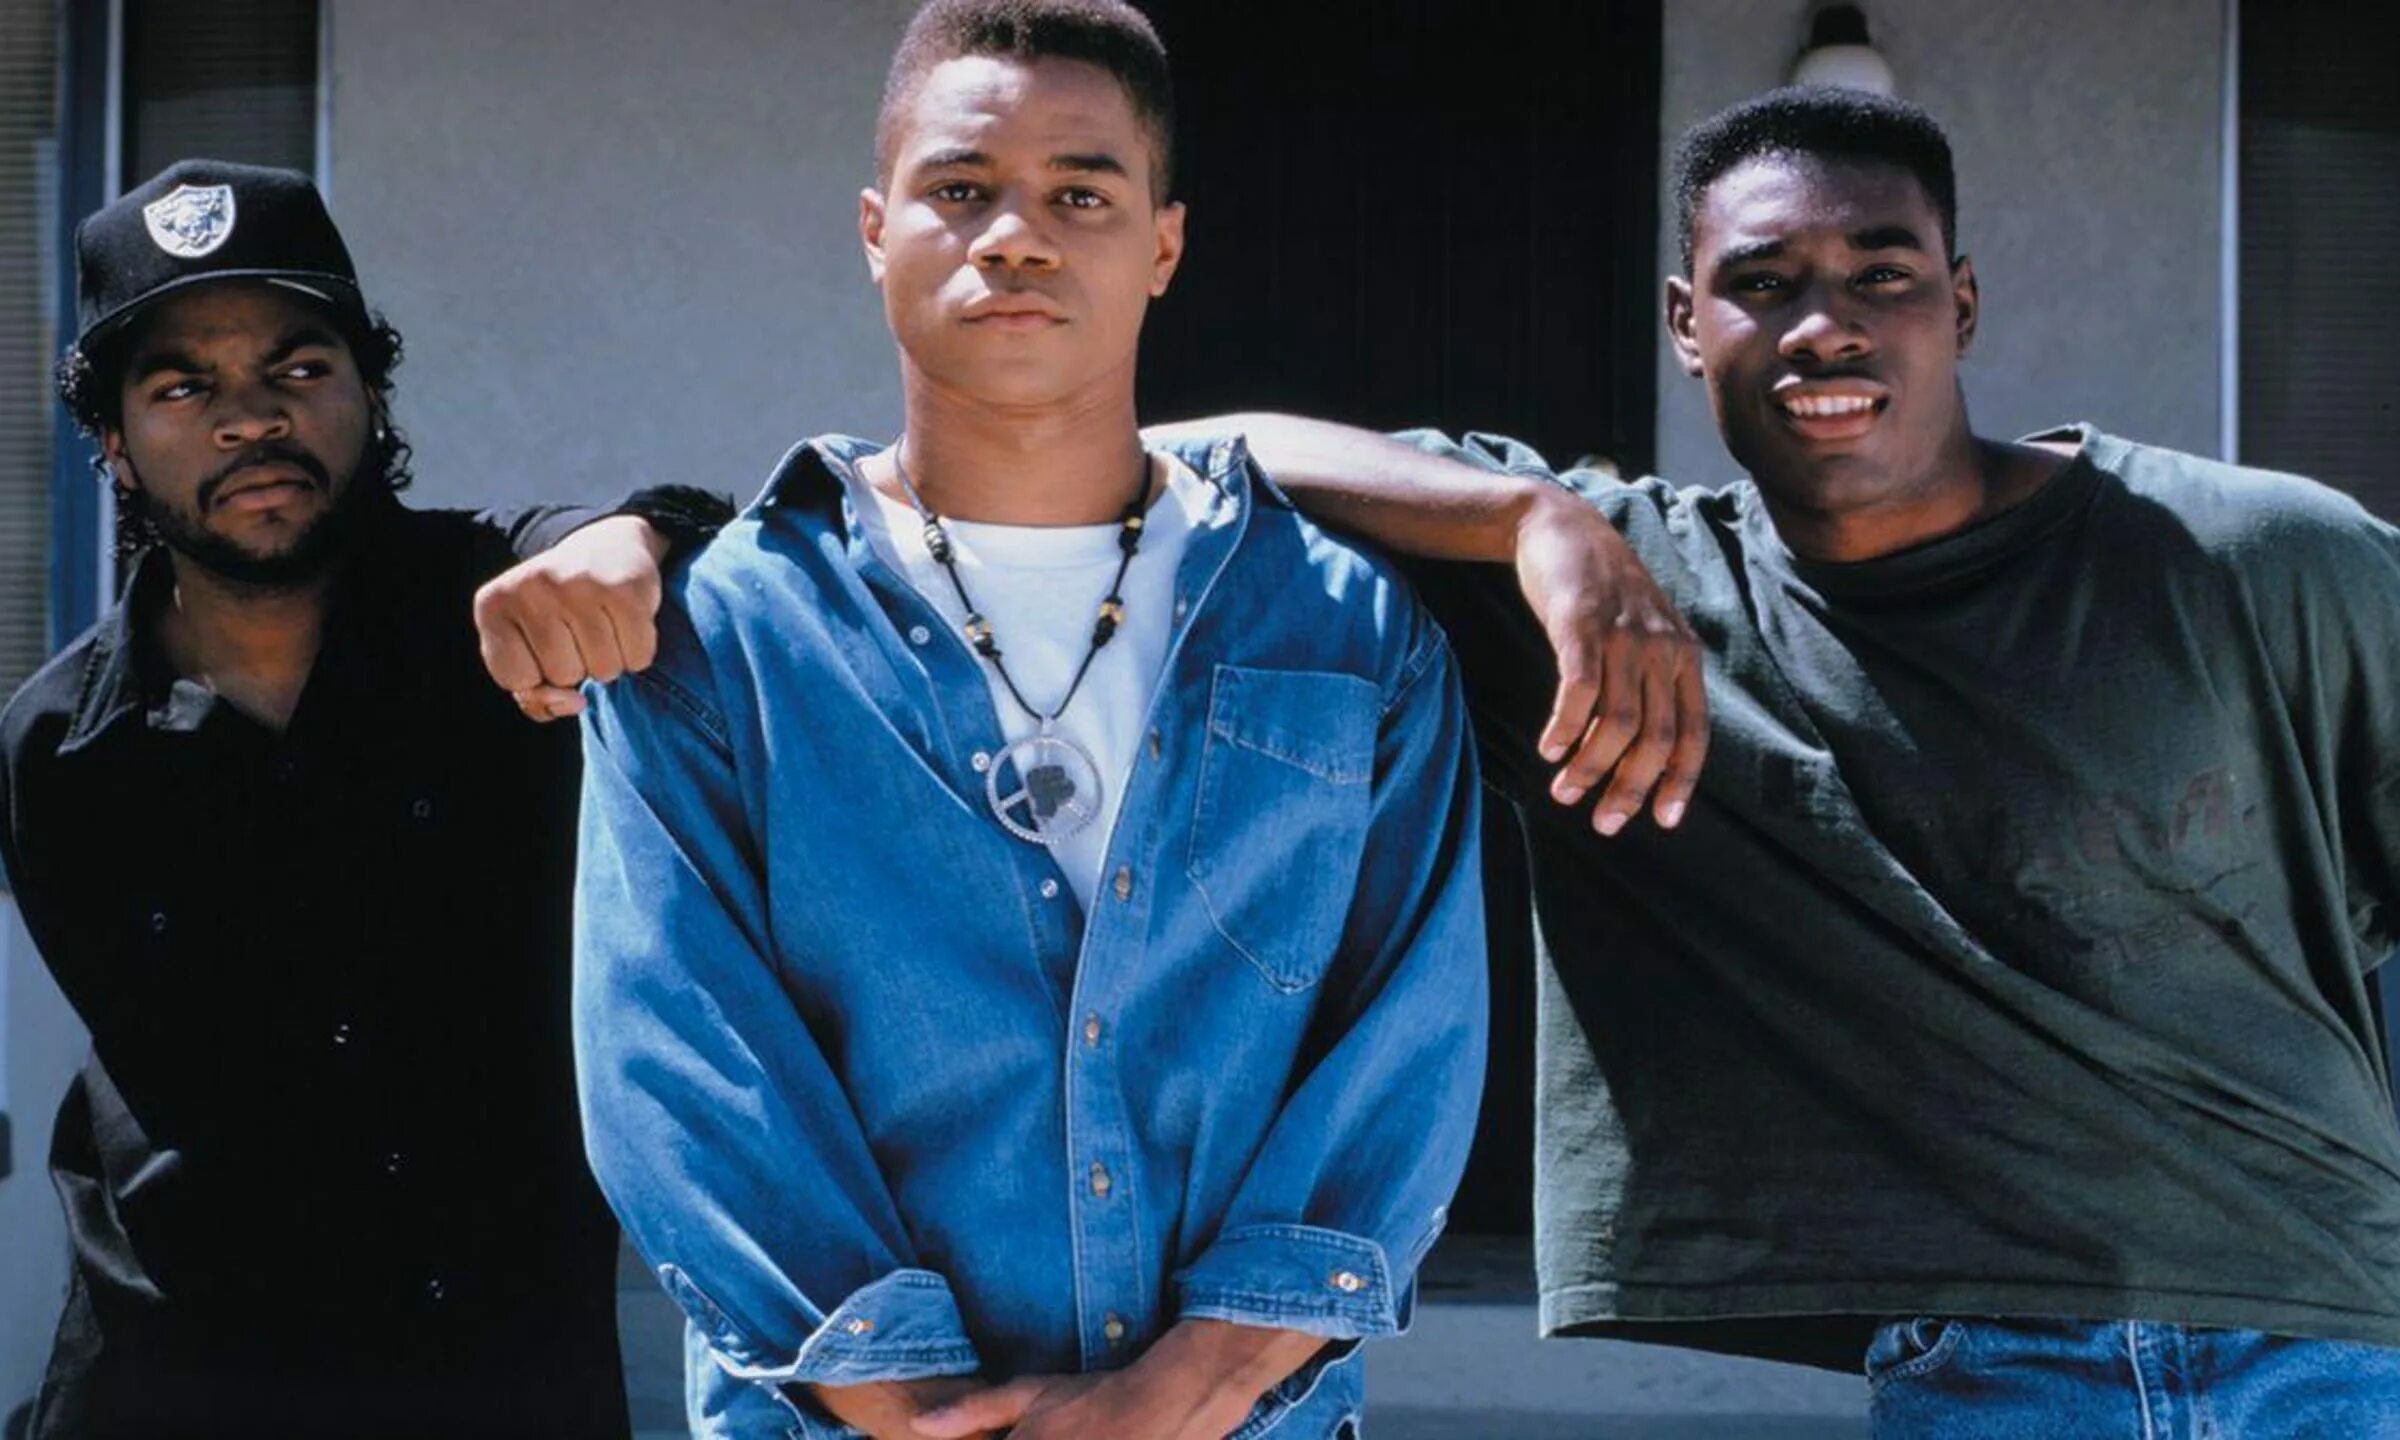 Ребята с улицы (1991) Boyz n the Hood. Ребята с улицы 1991 Ice Cube. Айс Кьюб ребята с улицы. Брат по соседству